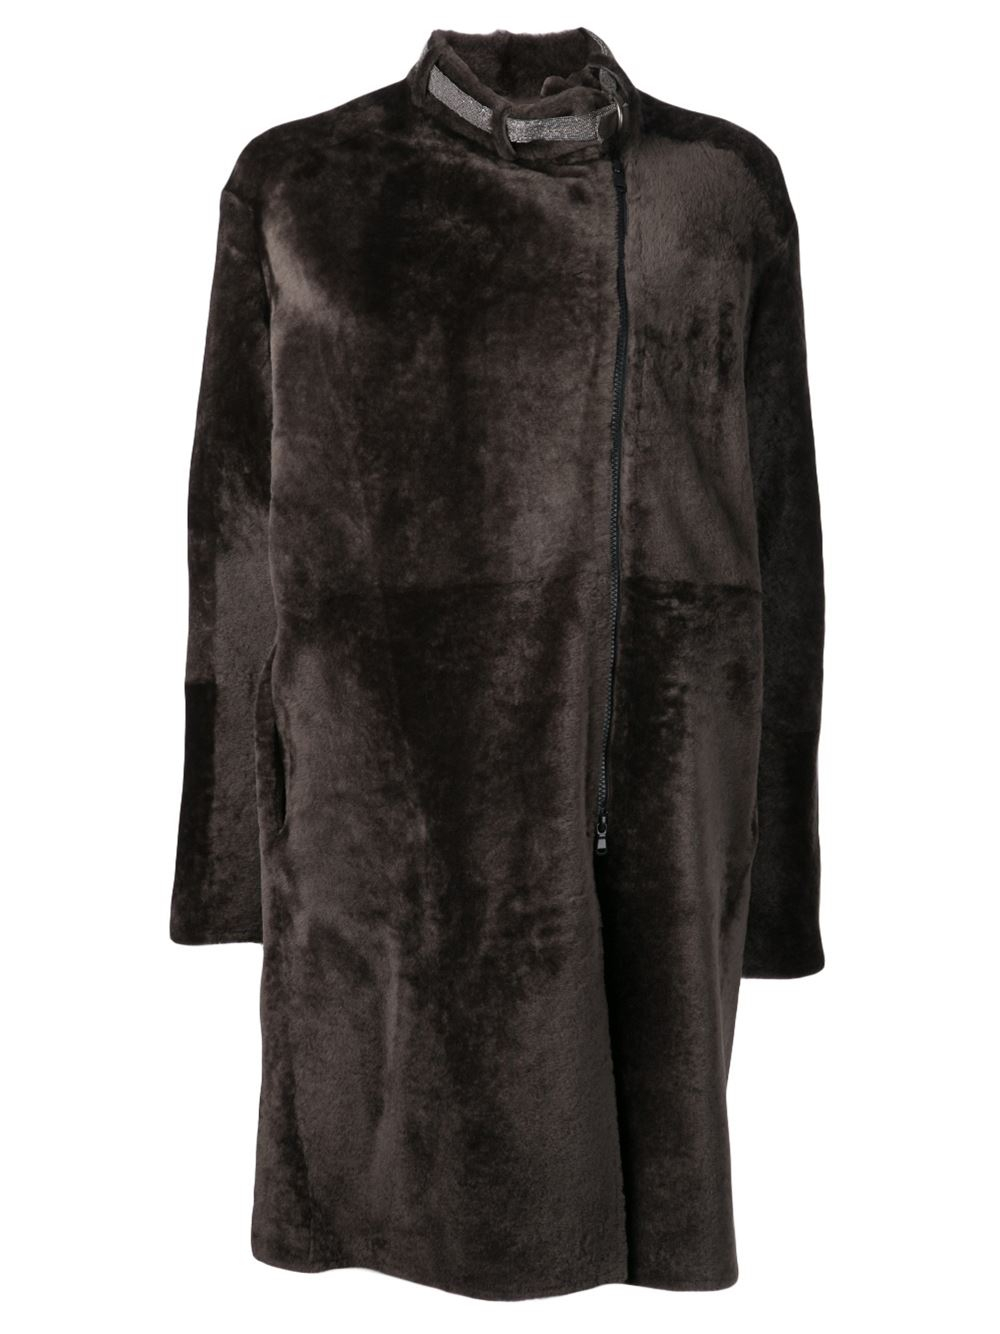 Brunello Cucinelli Shearling Long Coat in Brown | Lyst